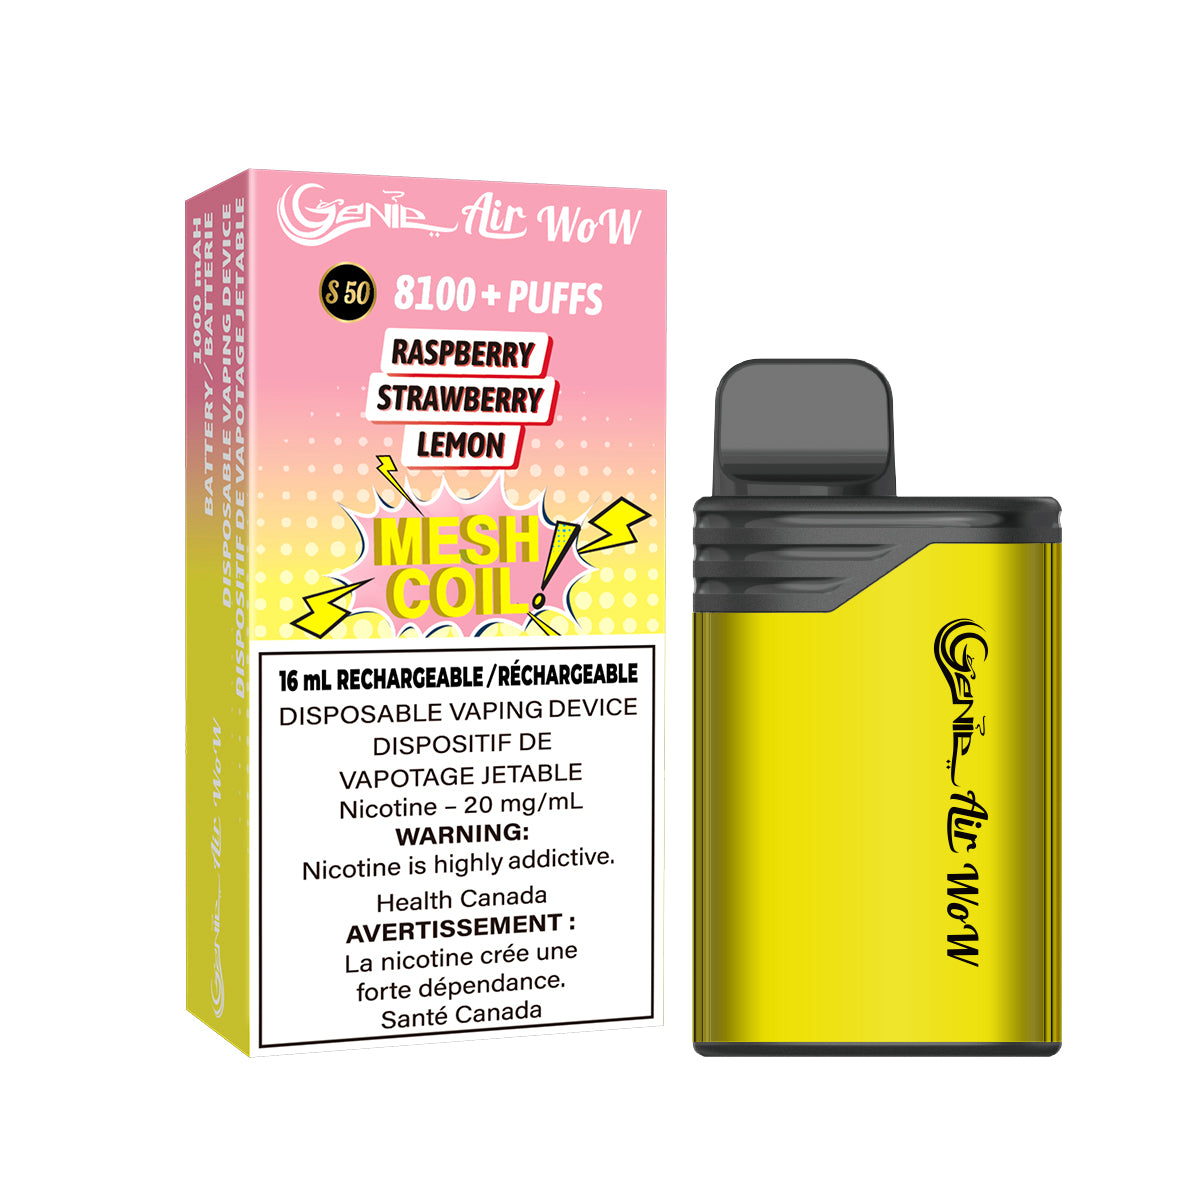 GENIE AIR WOW - raspberry strawberry lemon 8100 Puffs  20 mg / mL Salt Nicotine  Juice Capacity: 16 mL  Battery: 1000 mAh Rechargeable   Mesh Coil Technology    s50